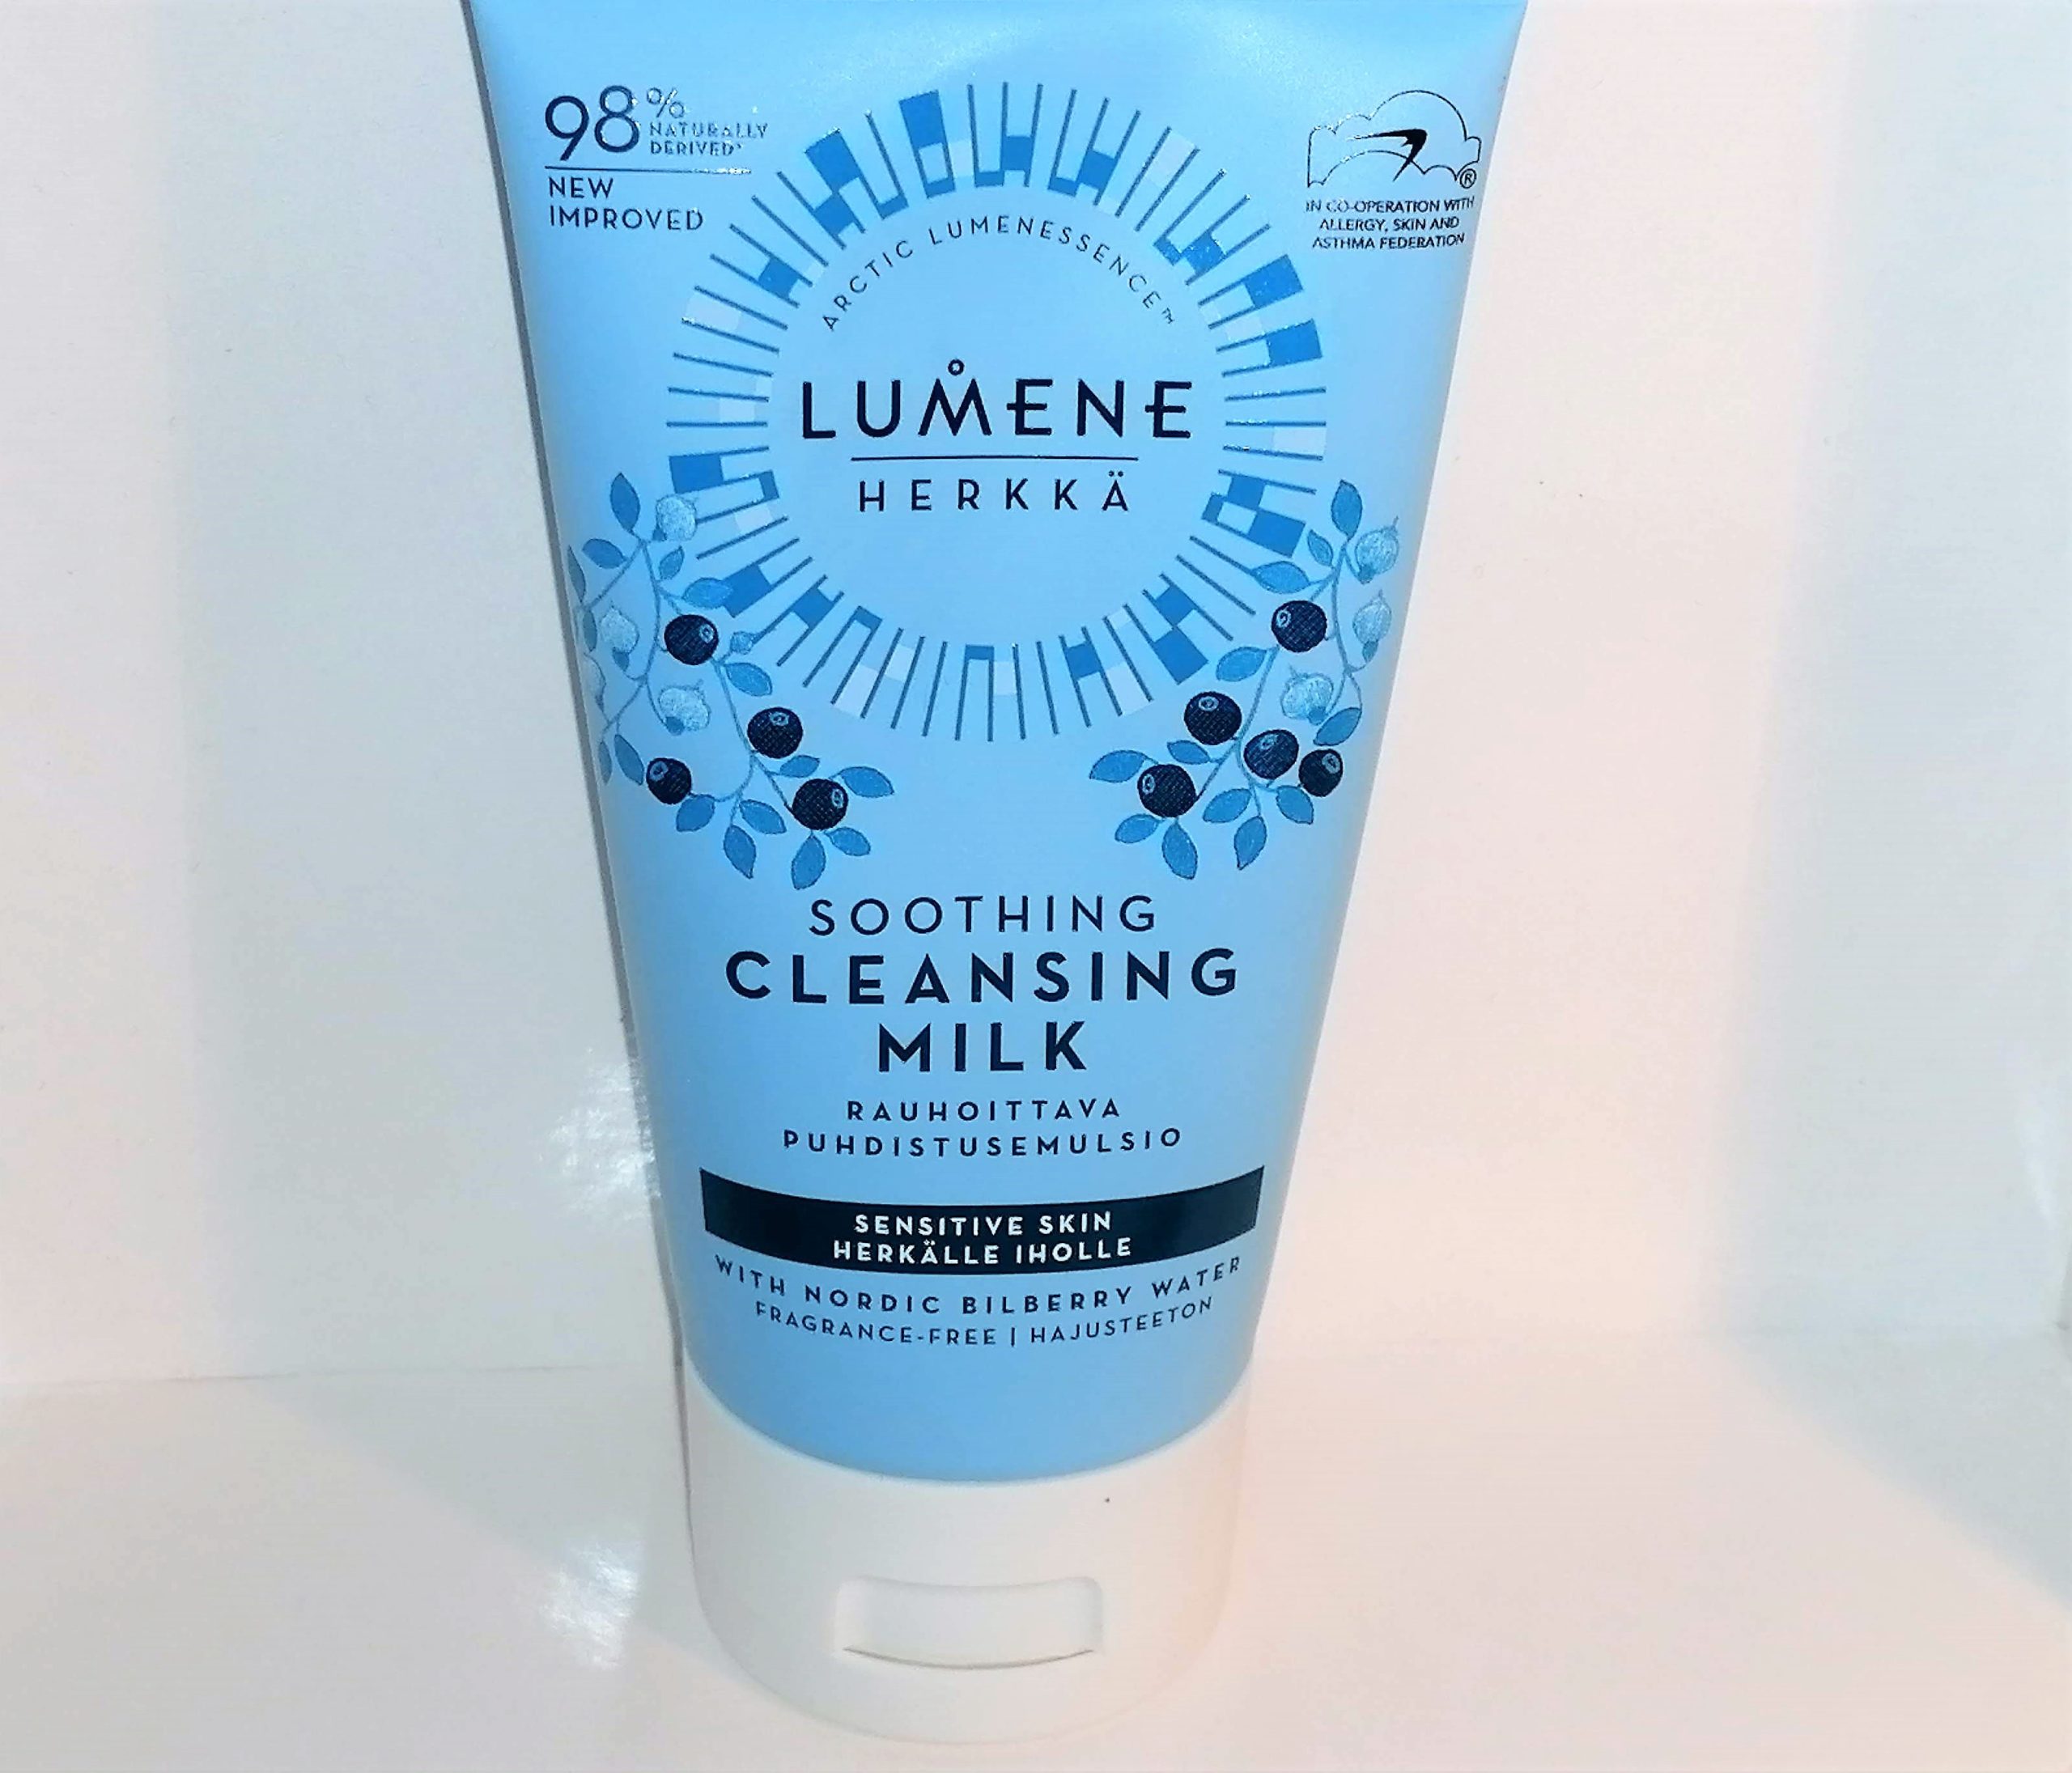 Soothing Cleansing Milk från Lumene